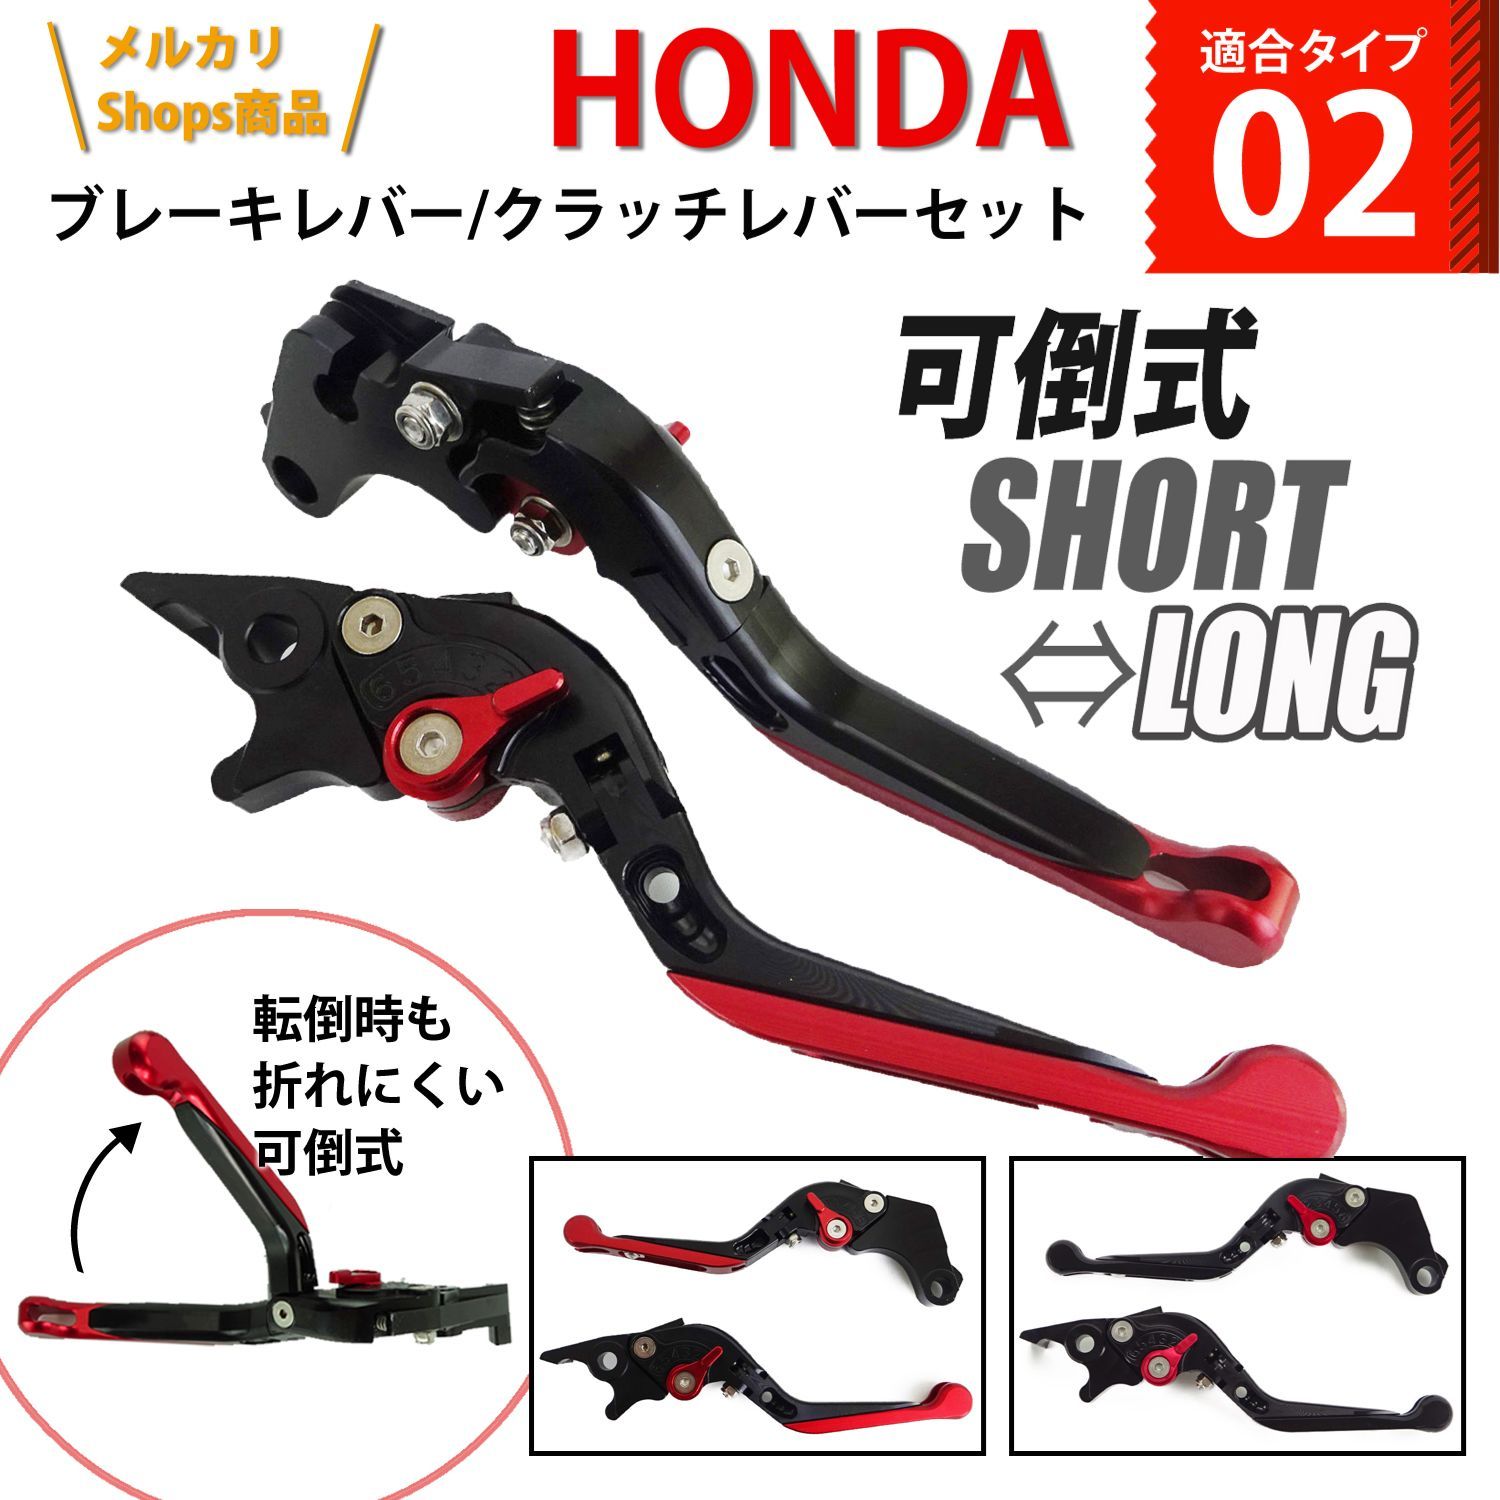 HONDA 02 可倒式 長さ伸縮 バイクブレーキレバー/クラッチレバーセット - バイクパーツショップprimavera - メルカリ